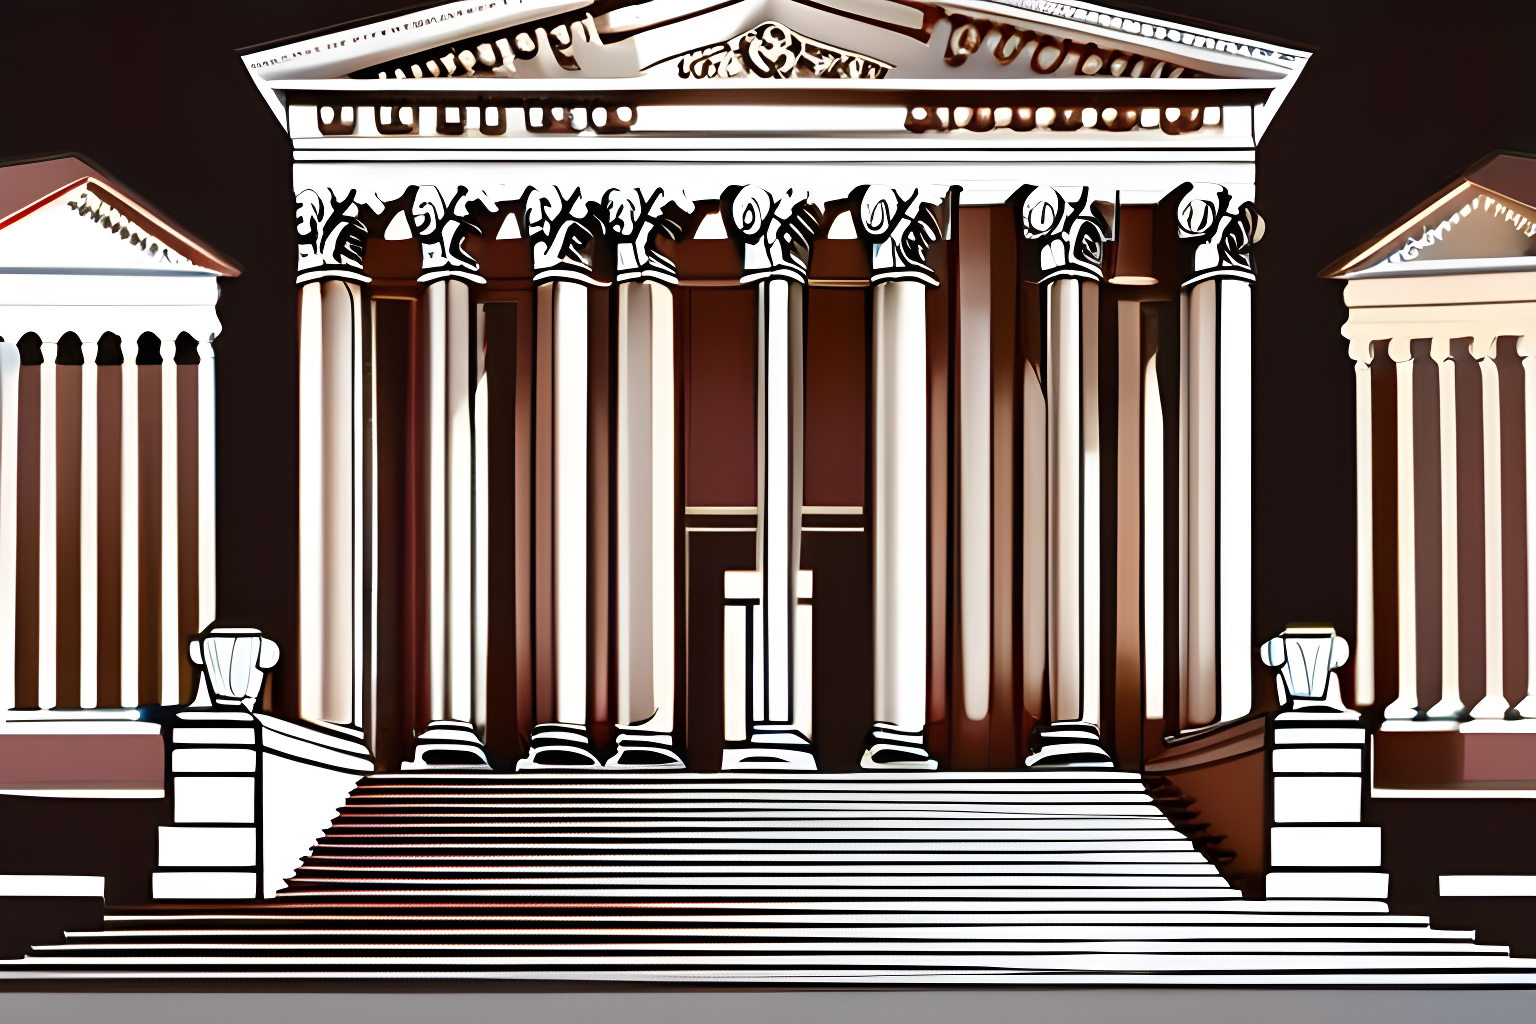 The United States Supreme court